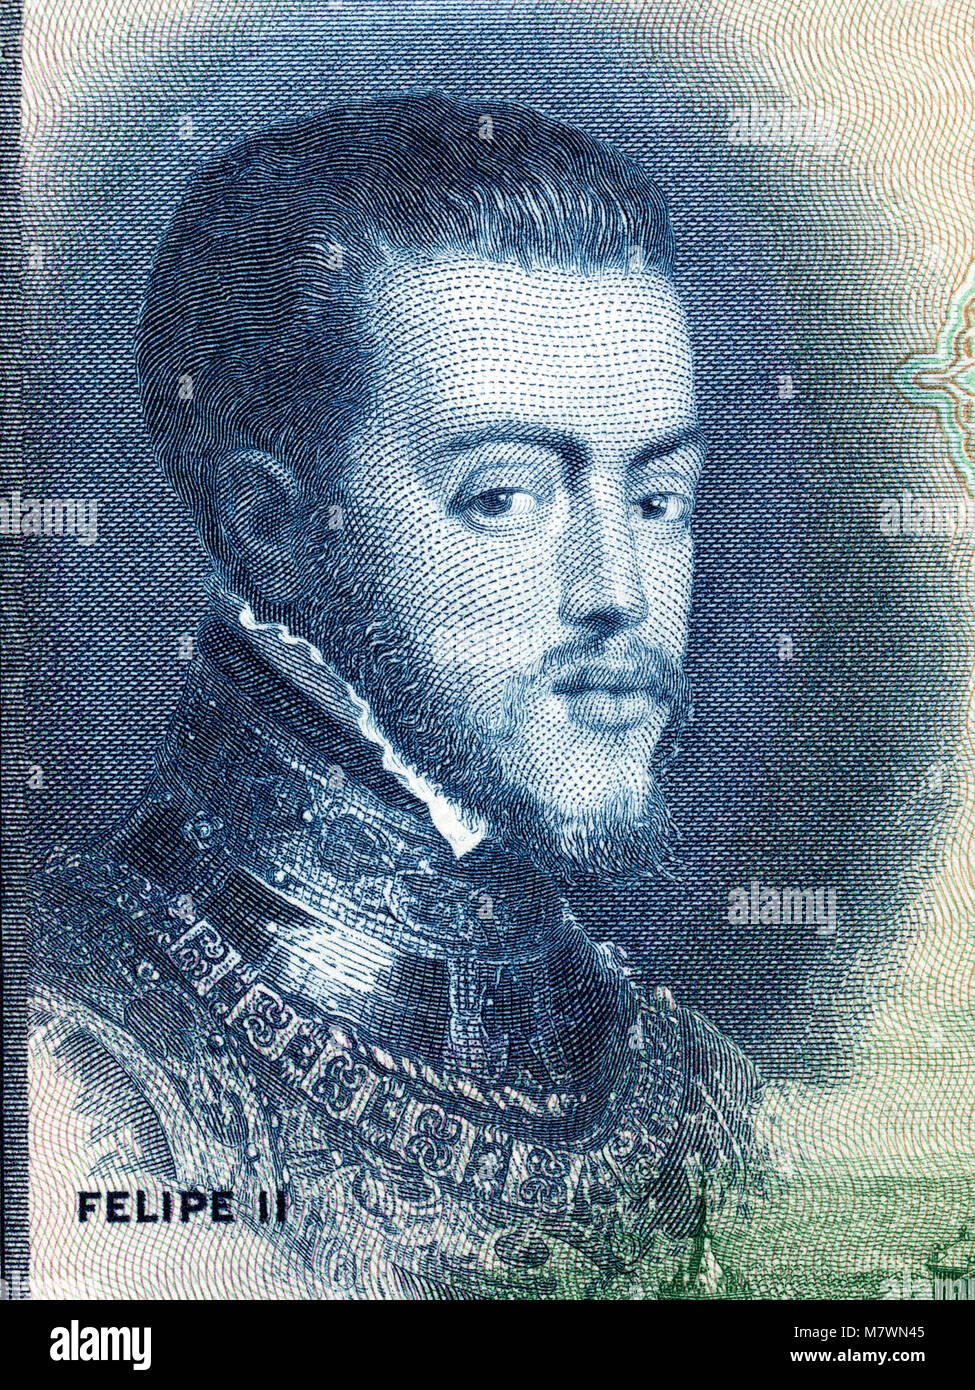 Philip II of Spain portrait from Spanish money Stock Photo